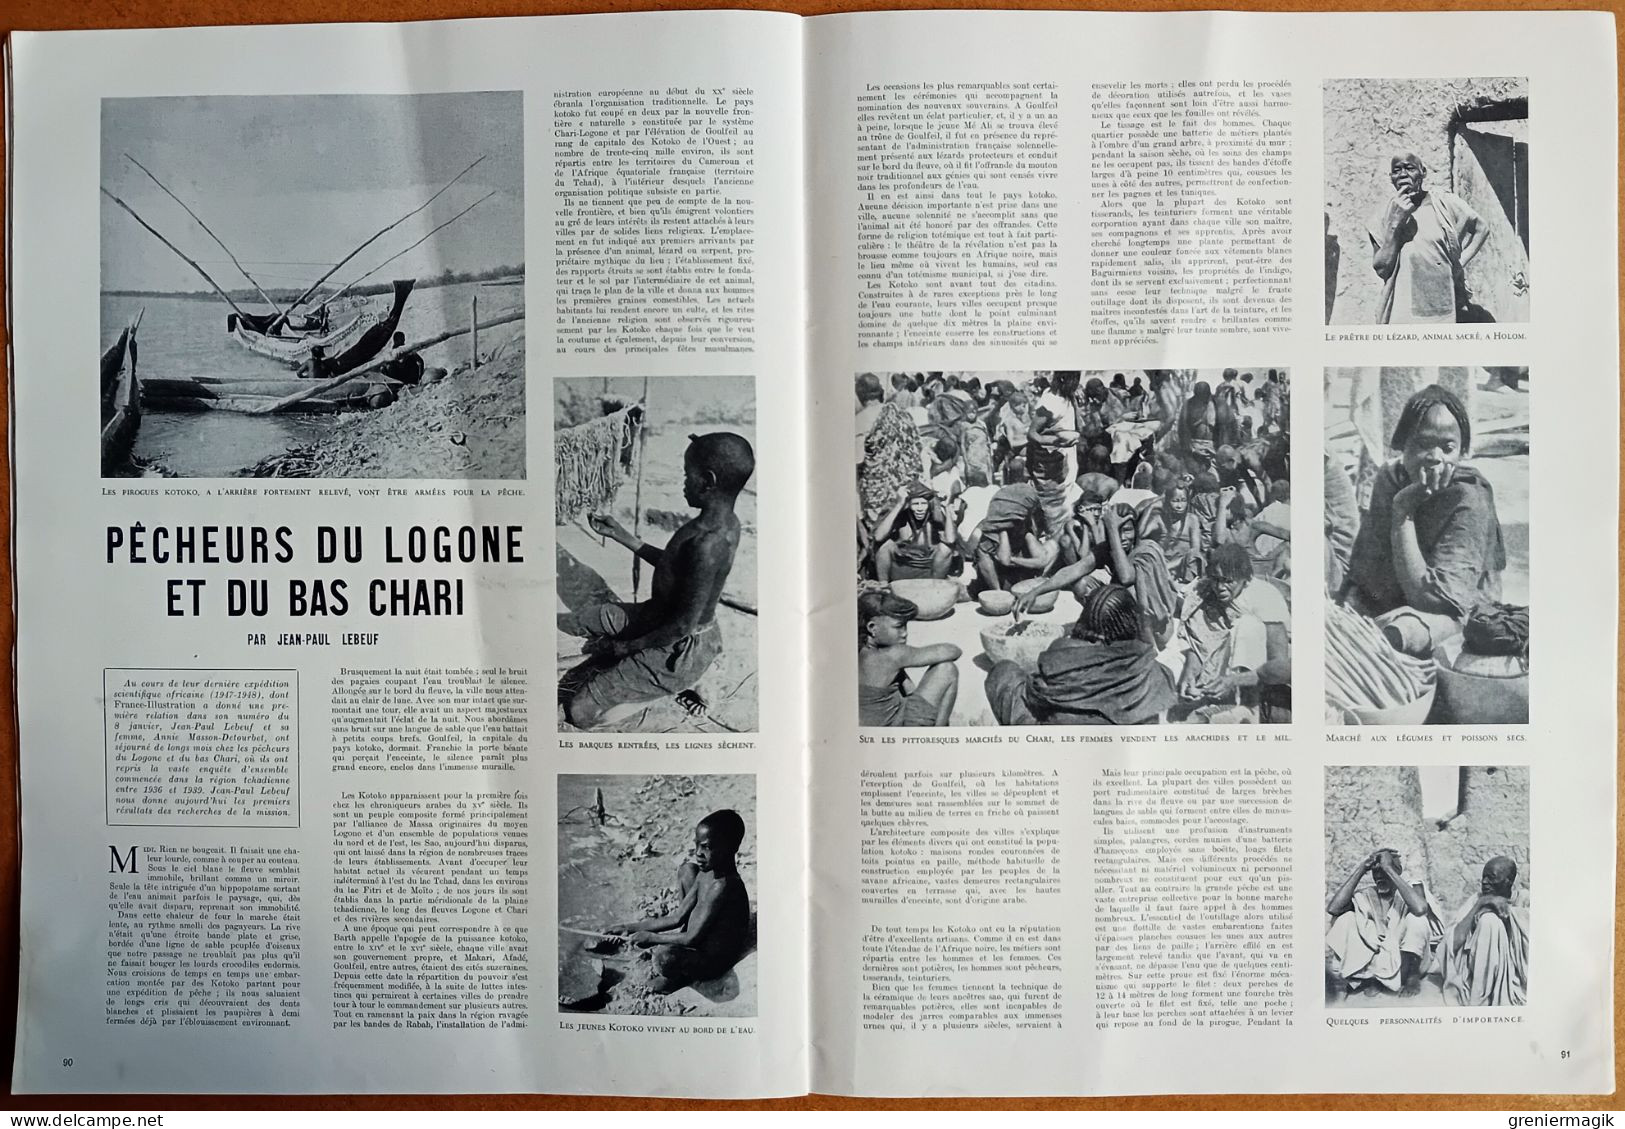 France Illustration N°171 22/01/1949 Expédition Groënland 1948 mission Paul-Emile Victor/Pêcheurs du Logone et Bas Chari